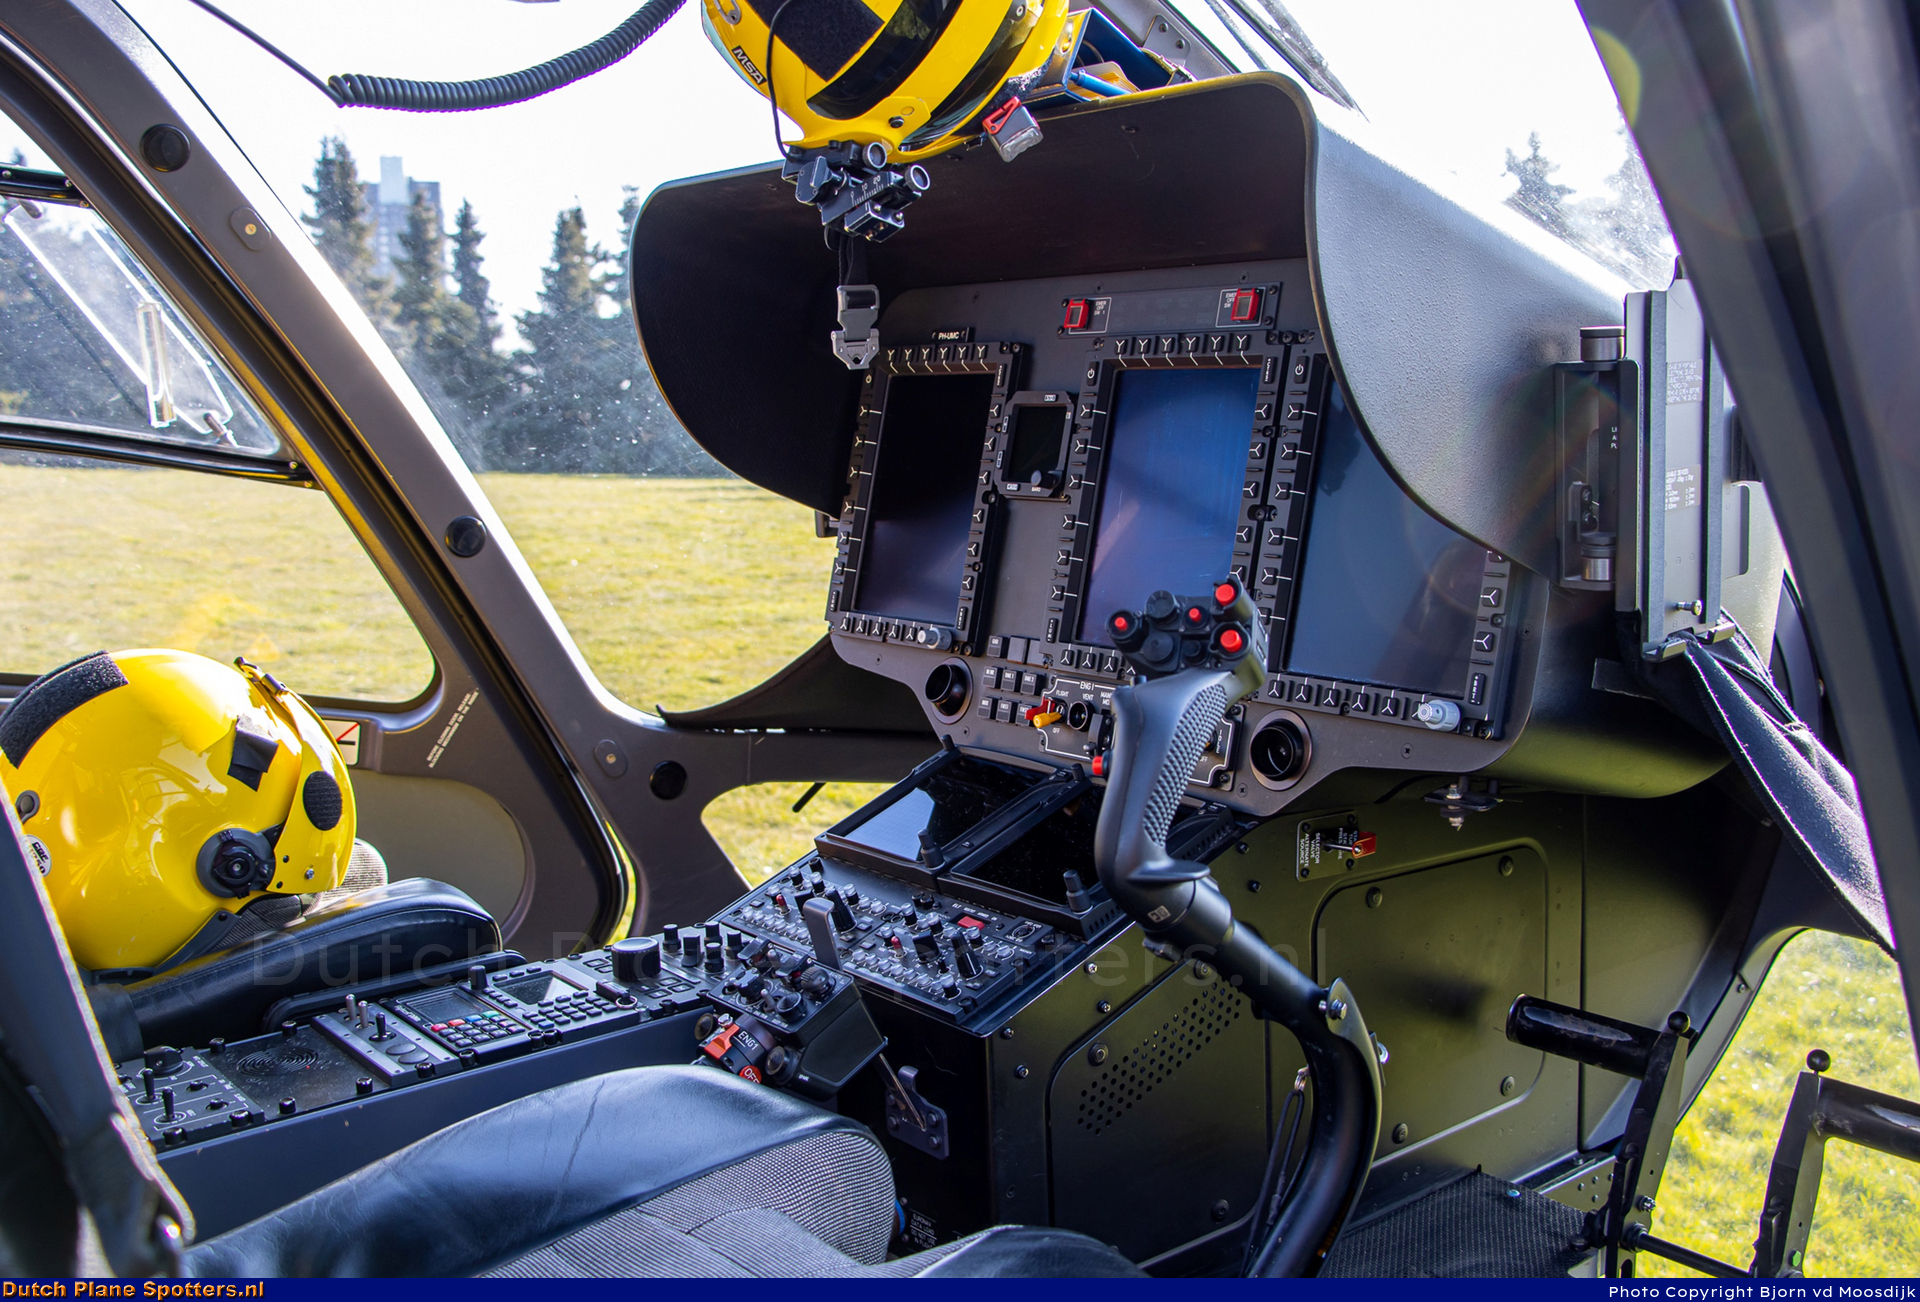 PH-UMC Airbus Helicopters H135 ANWB Medical Air Assistance by Bjorn van de Moosdijk